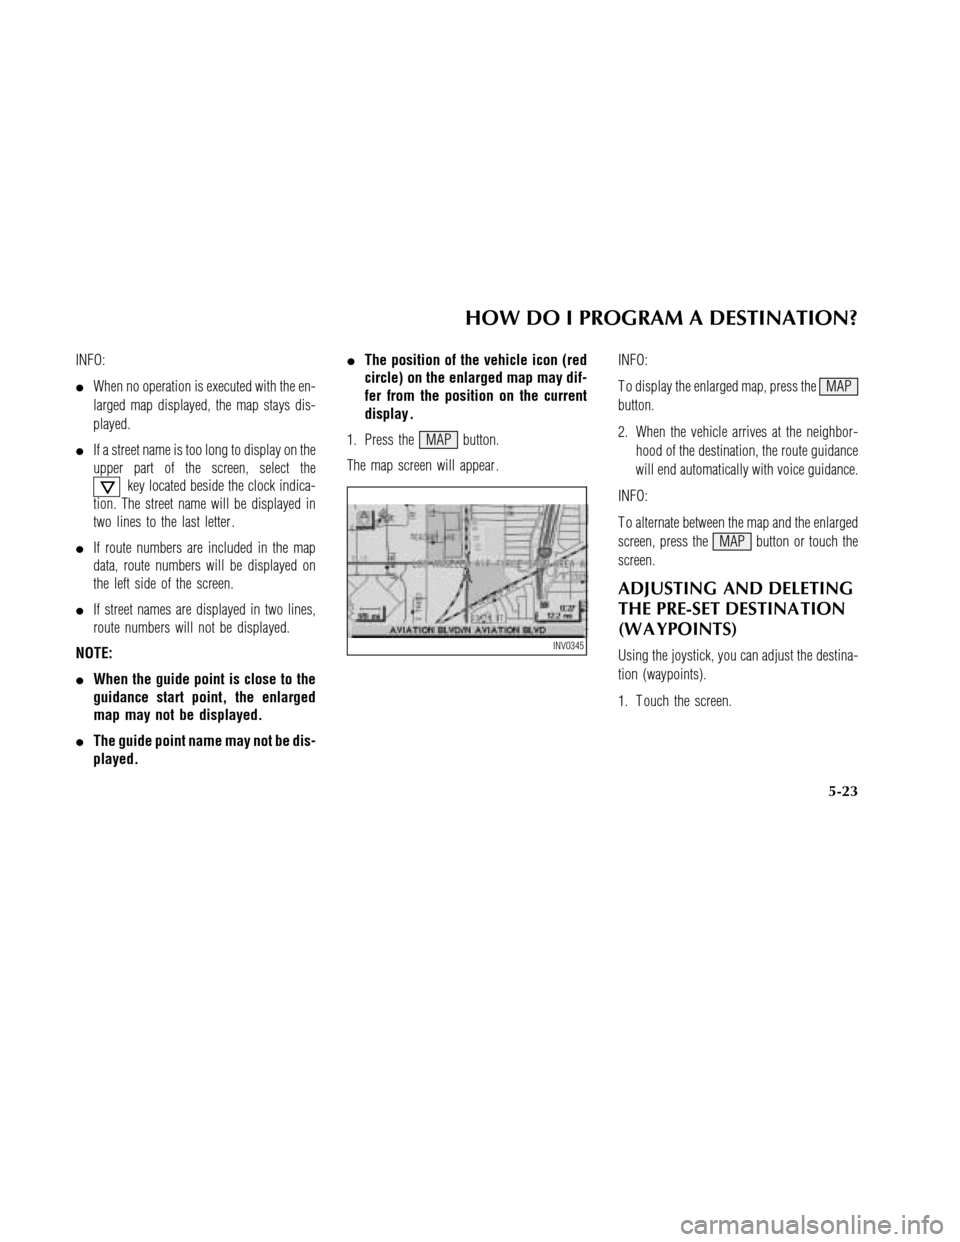 NISSAN MAXIMA 2003 A33 / 5.G Navigation Manual INFO:
When no operation is executed with the en-
larged map displayed, the map stays dis-
played.
If a street name is too long to display on the
upper part of the screen, select the
key located besi